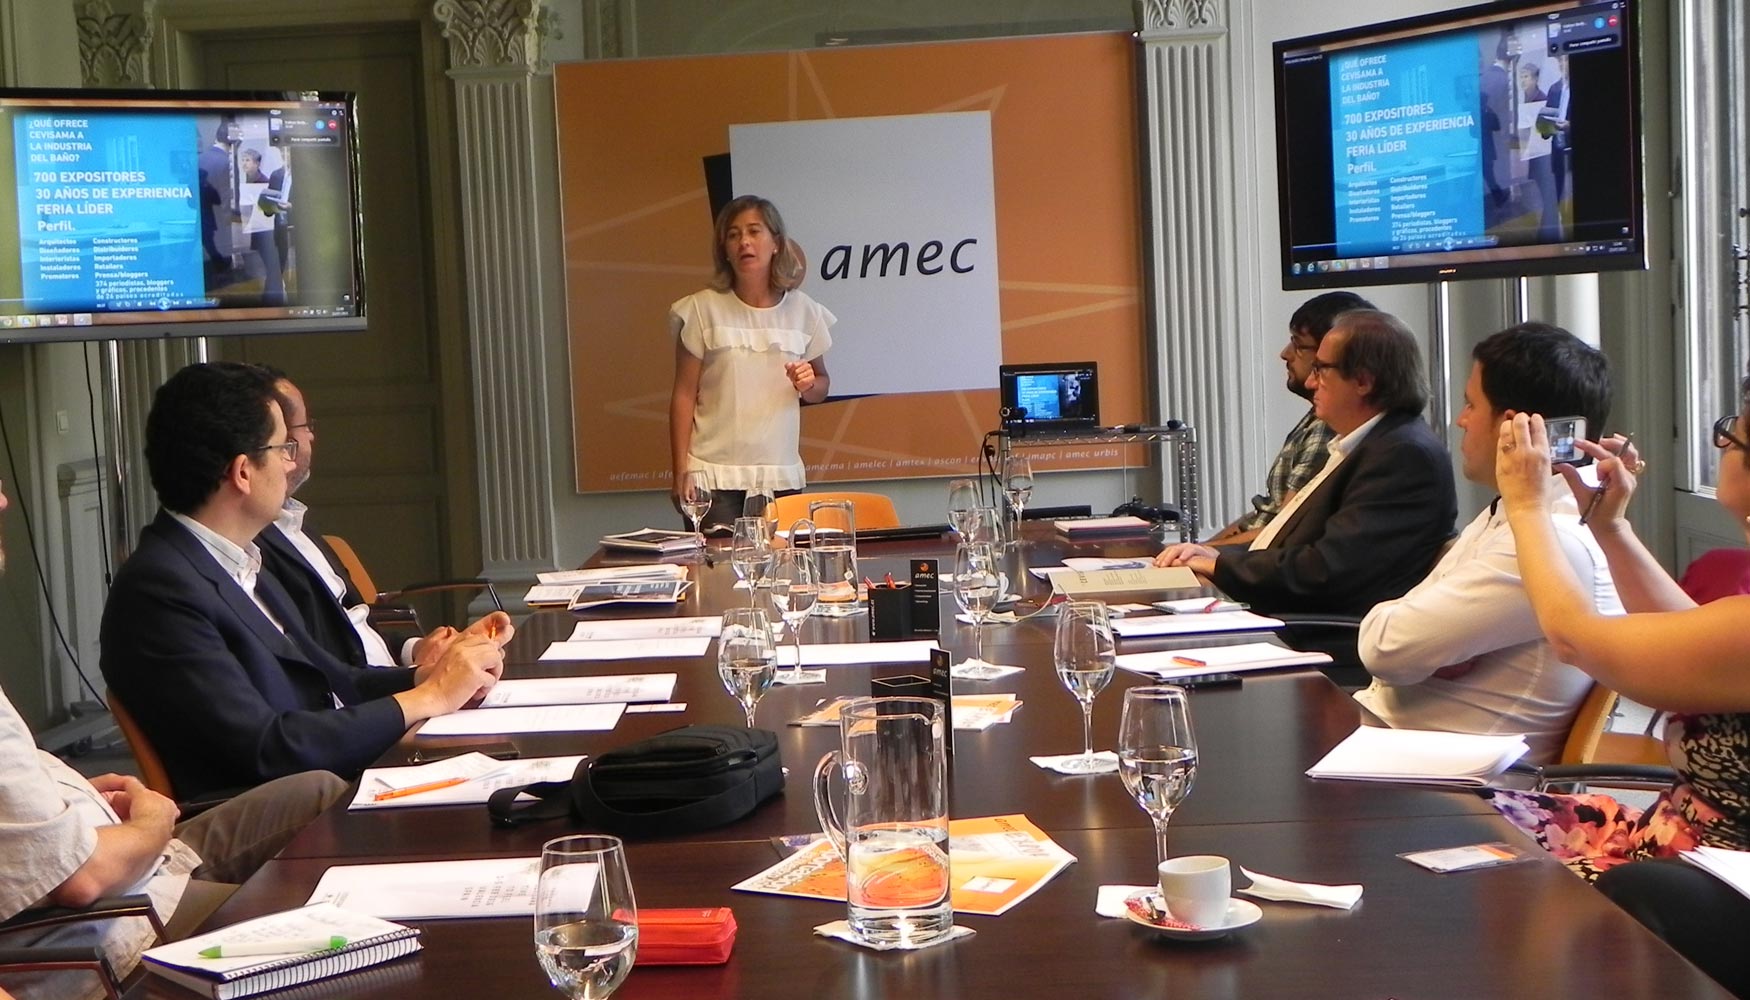 Presentacin de la directora de Cevisama, Carmen lvarez, ante empresas del sector de bao de Amec Ascon